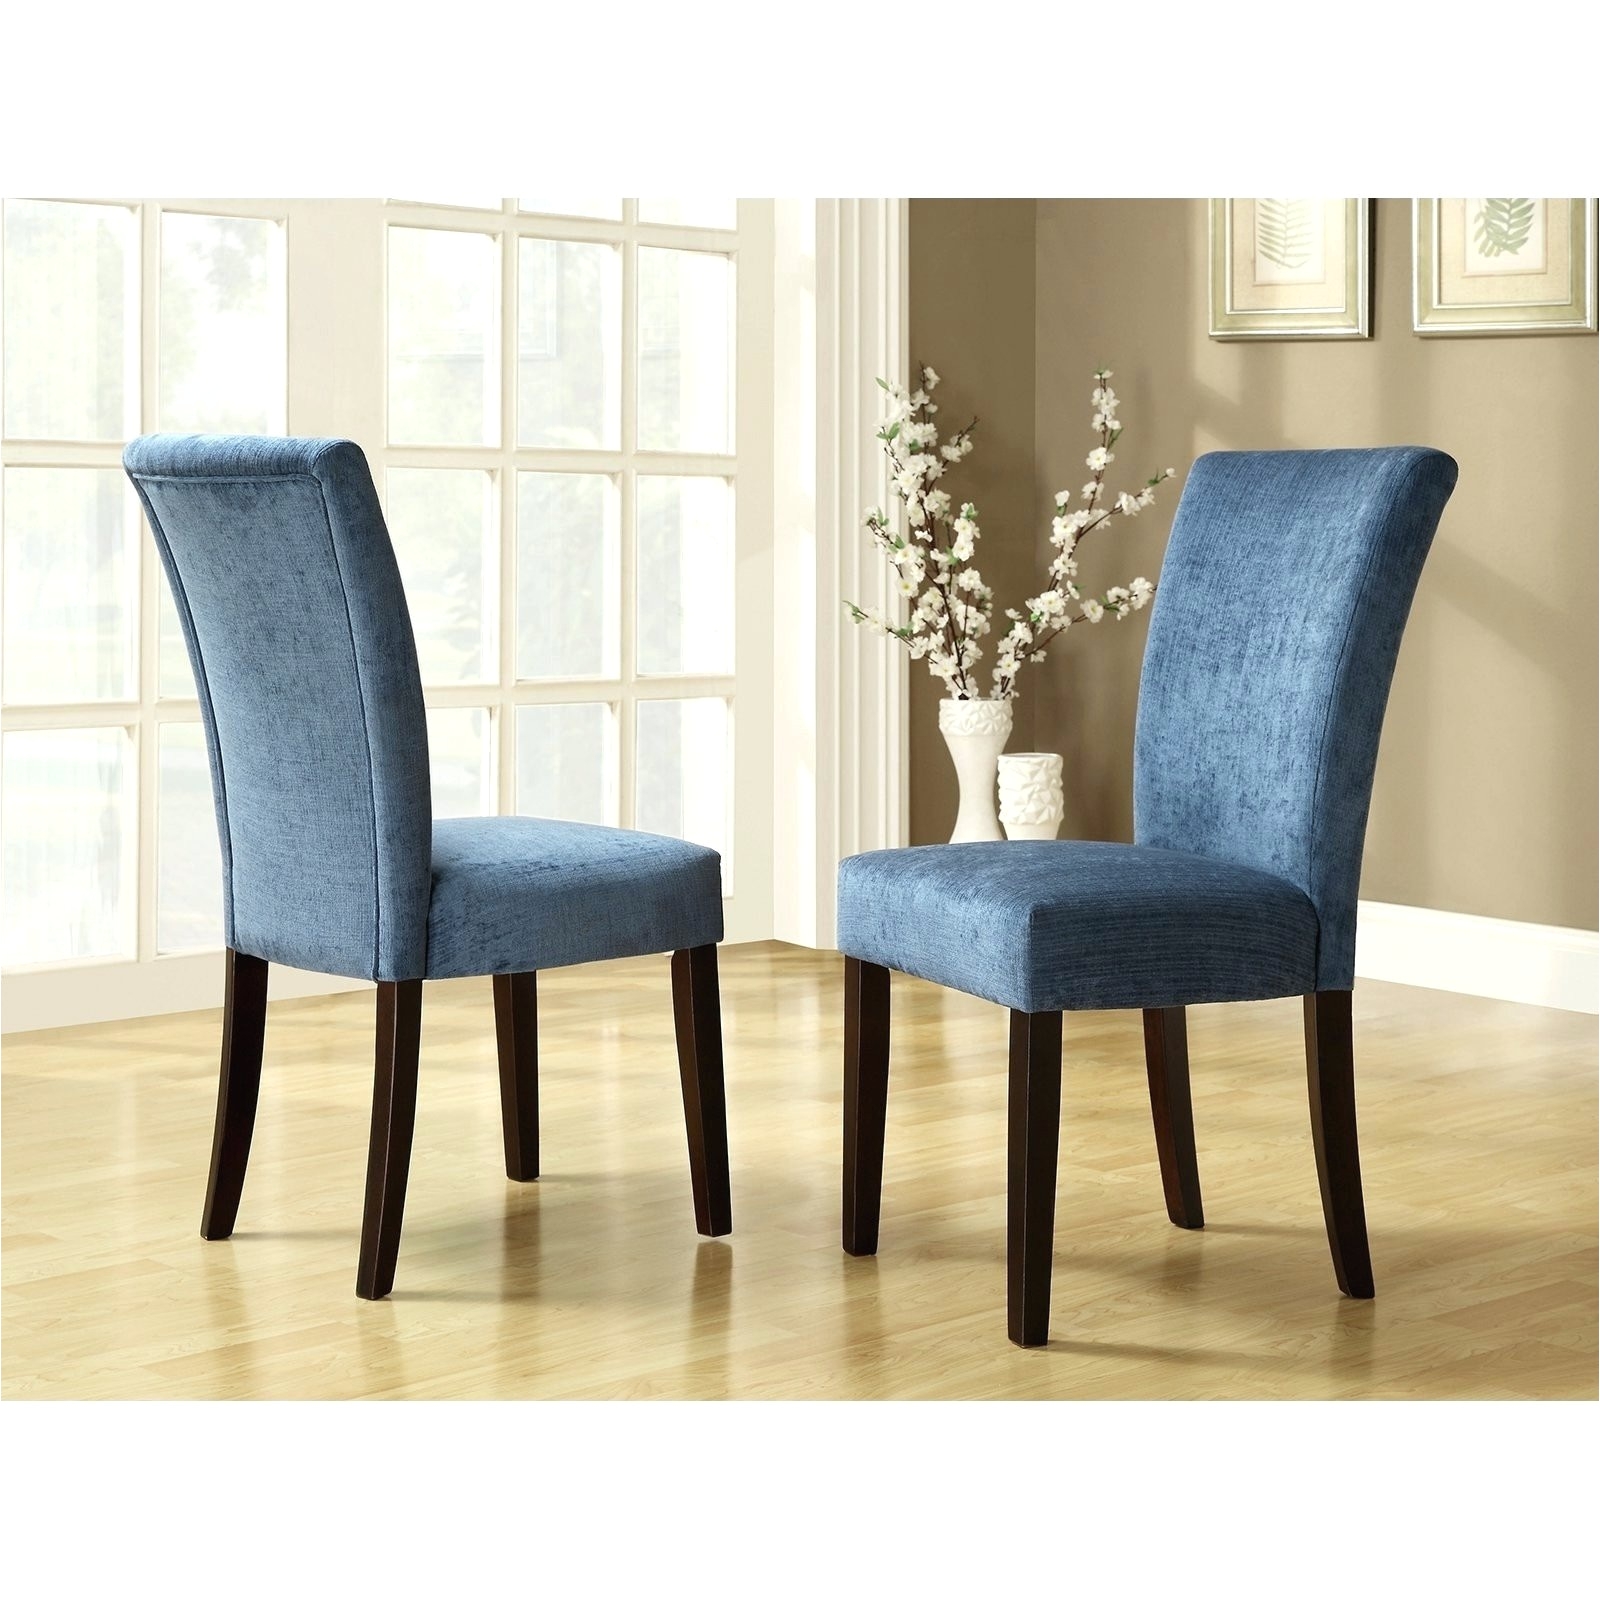 Фото стулья гостиной. Стул Dining Chair Foucault Blue. Стул Pescara. Lisette Dining Chair.